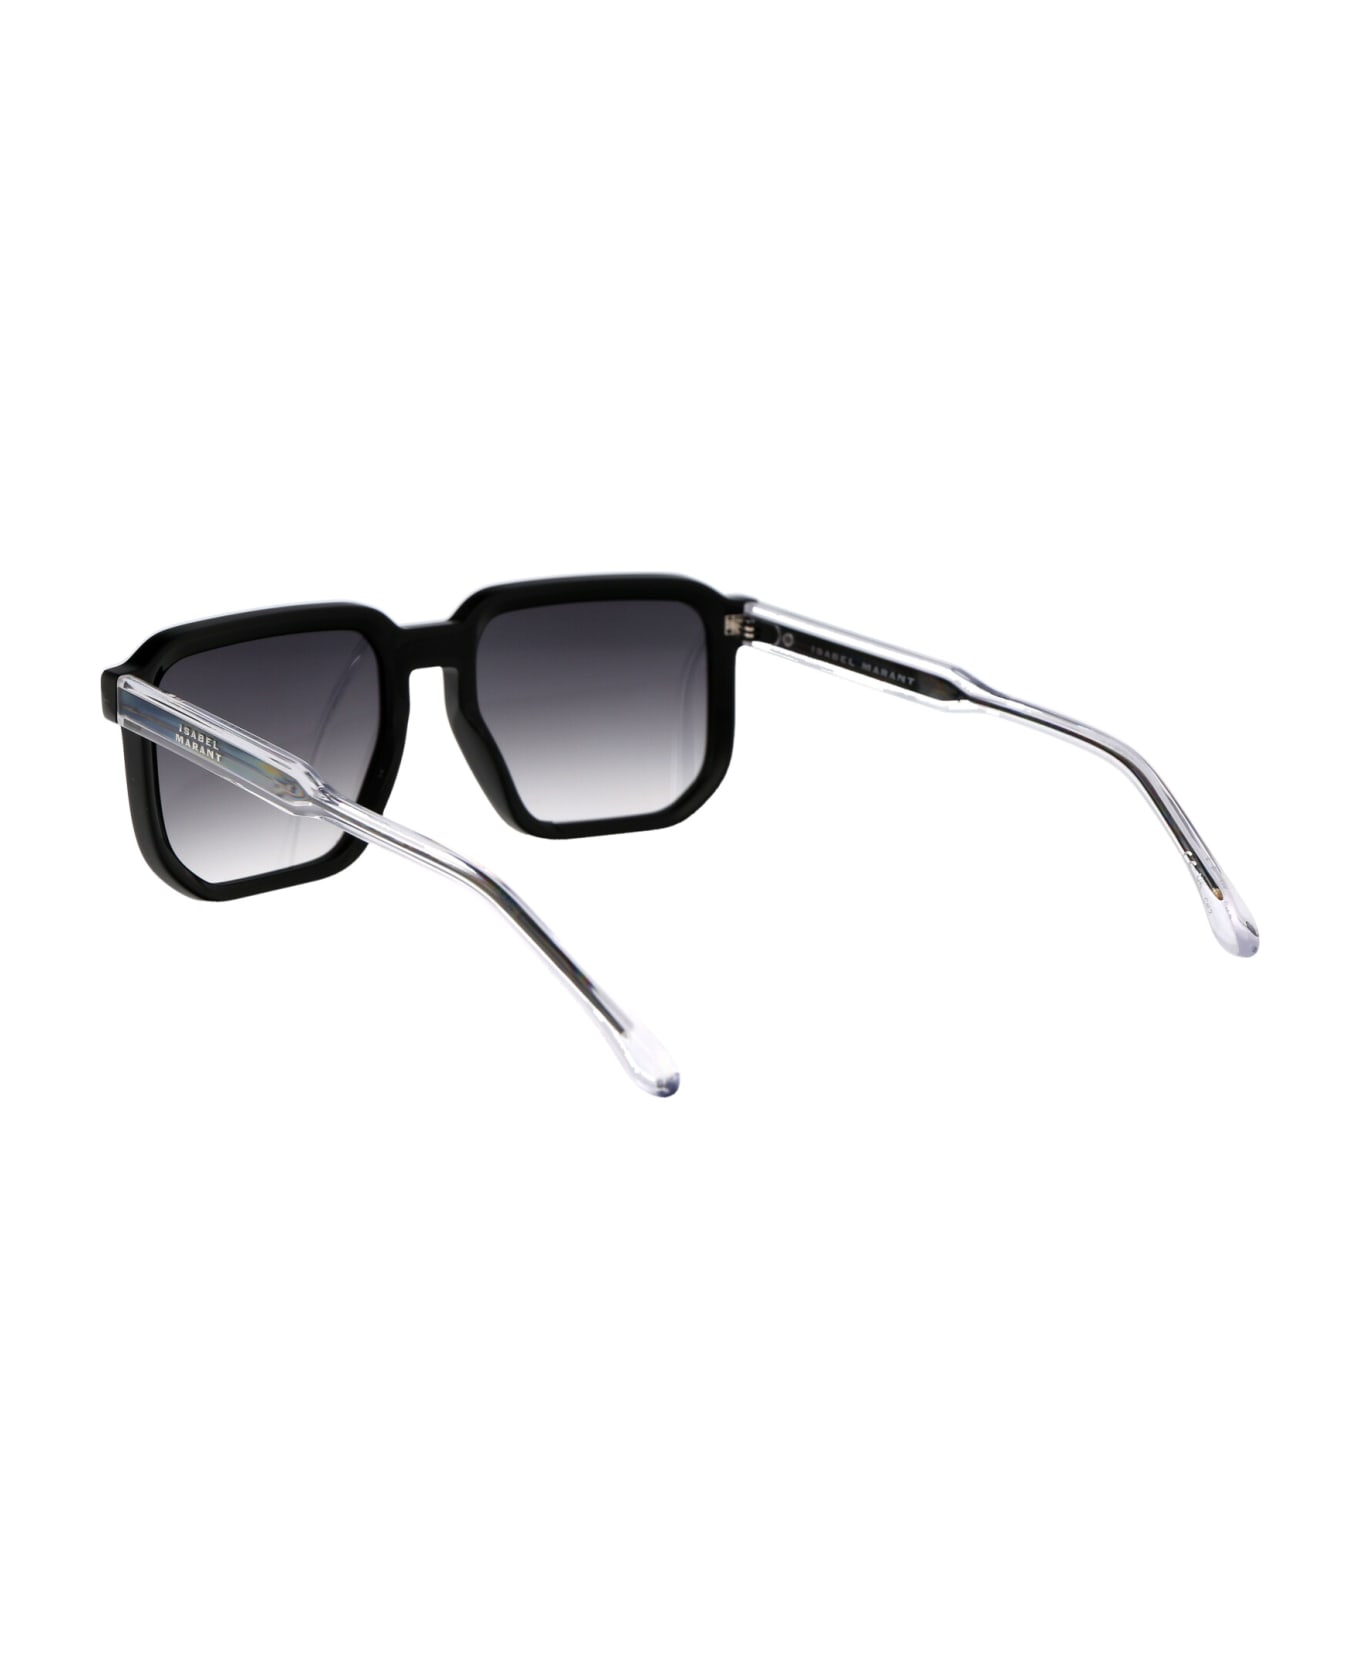 Isabel Marant Im 0165/s Sunglasses - 8079O BLACK サングラス